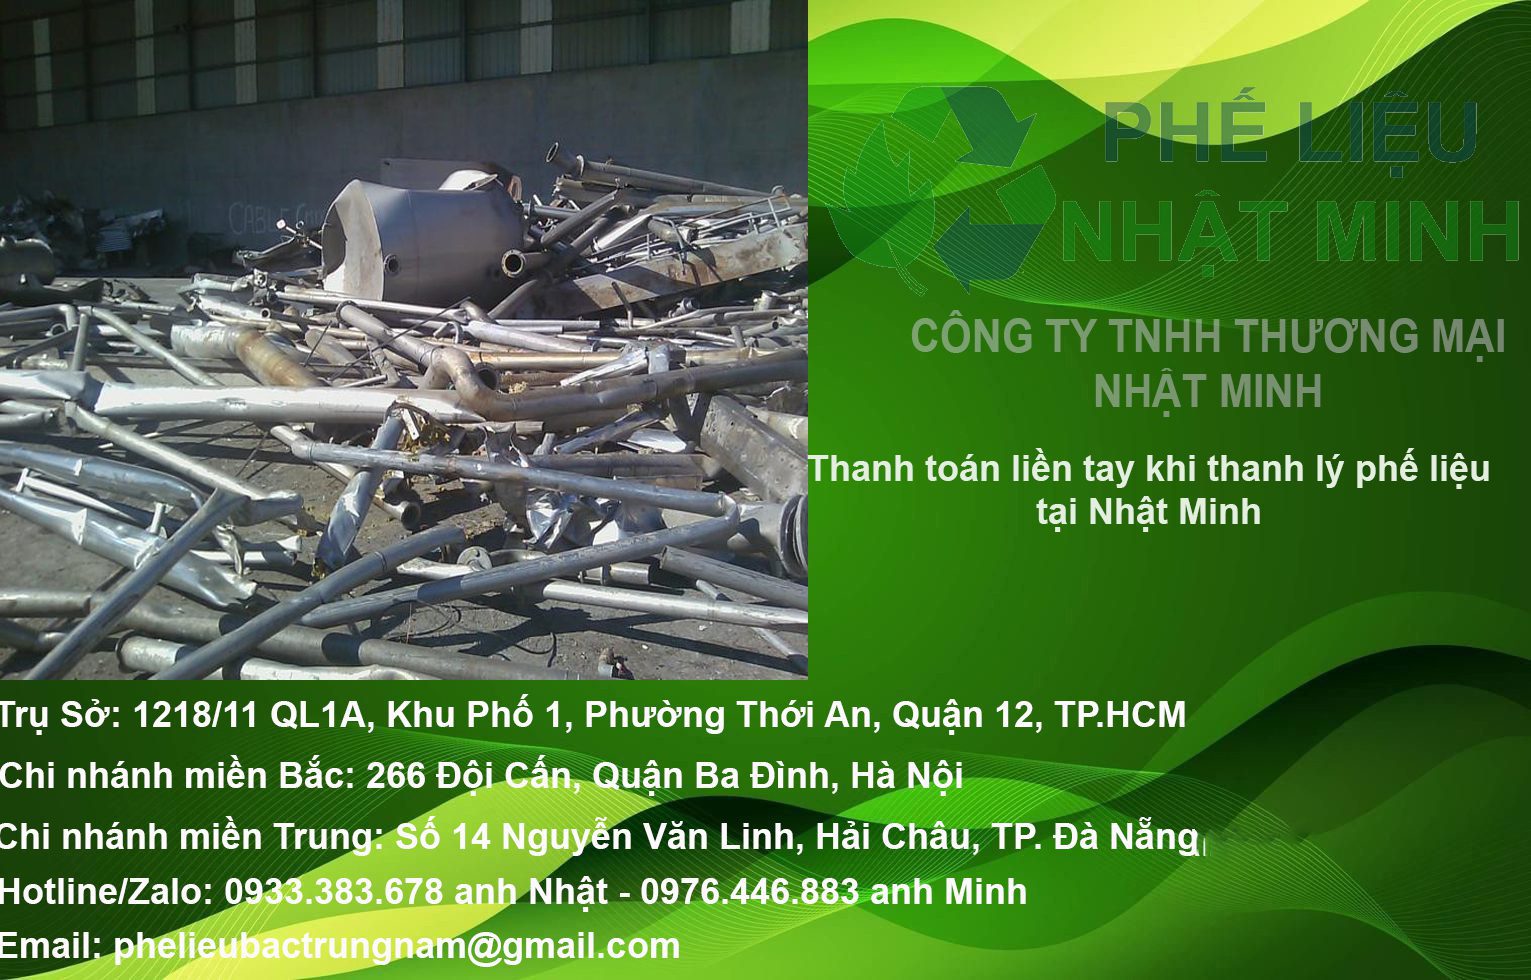 Thanh Ly Phe Lieu Nhat Minh Company 1